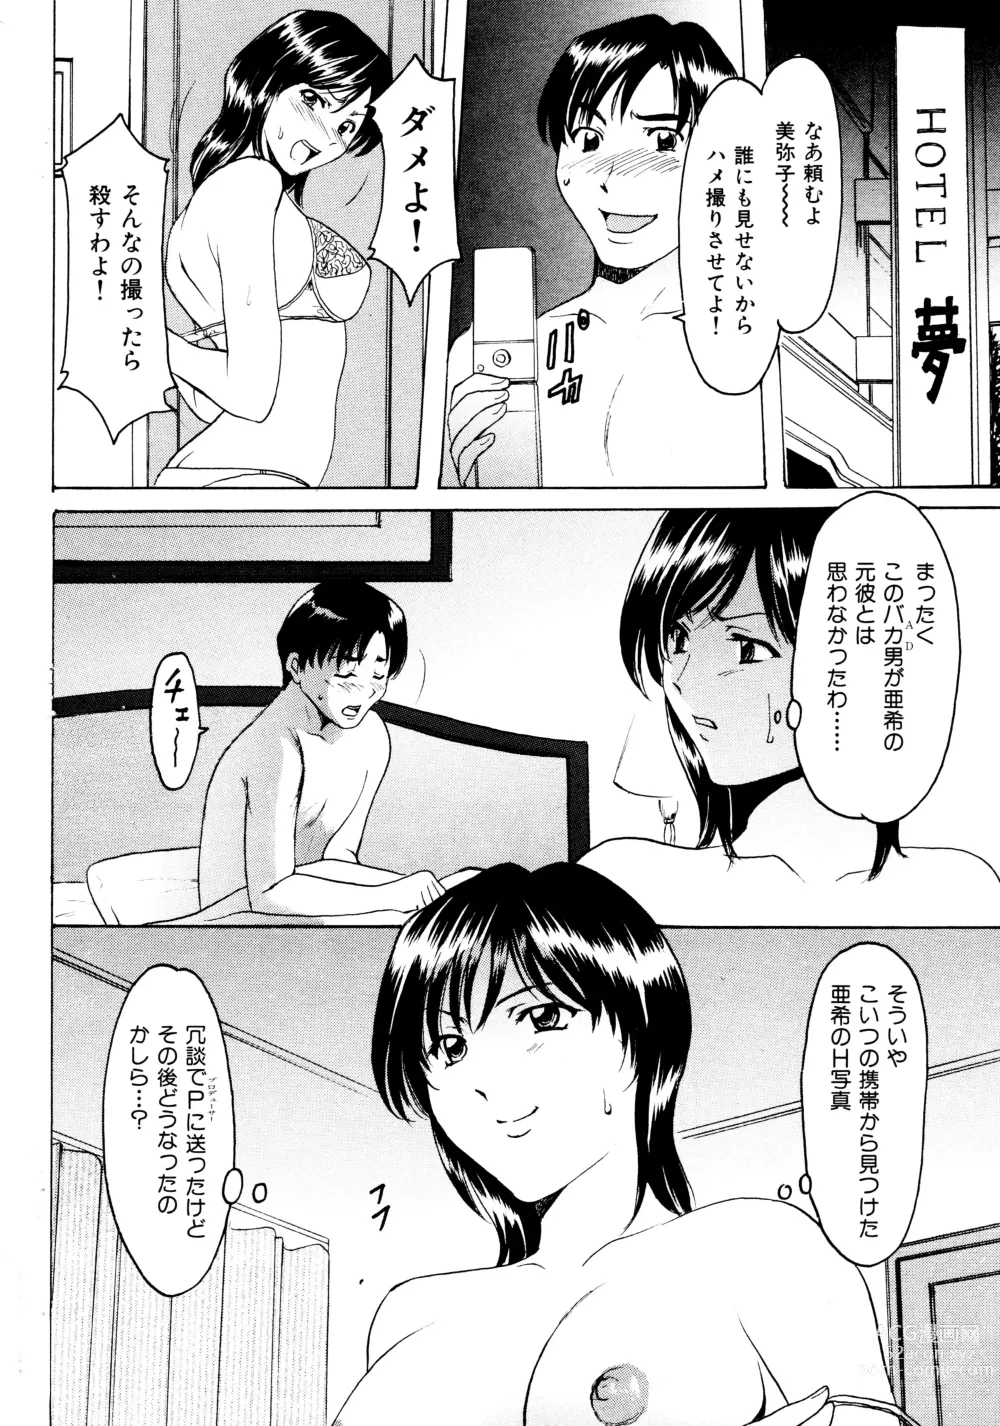 Page 189 of doujinshi Mi Comic-ka Sakuhinshou 2